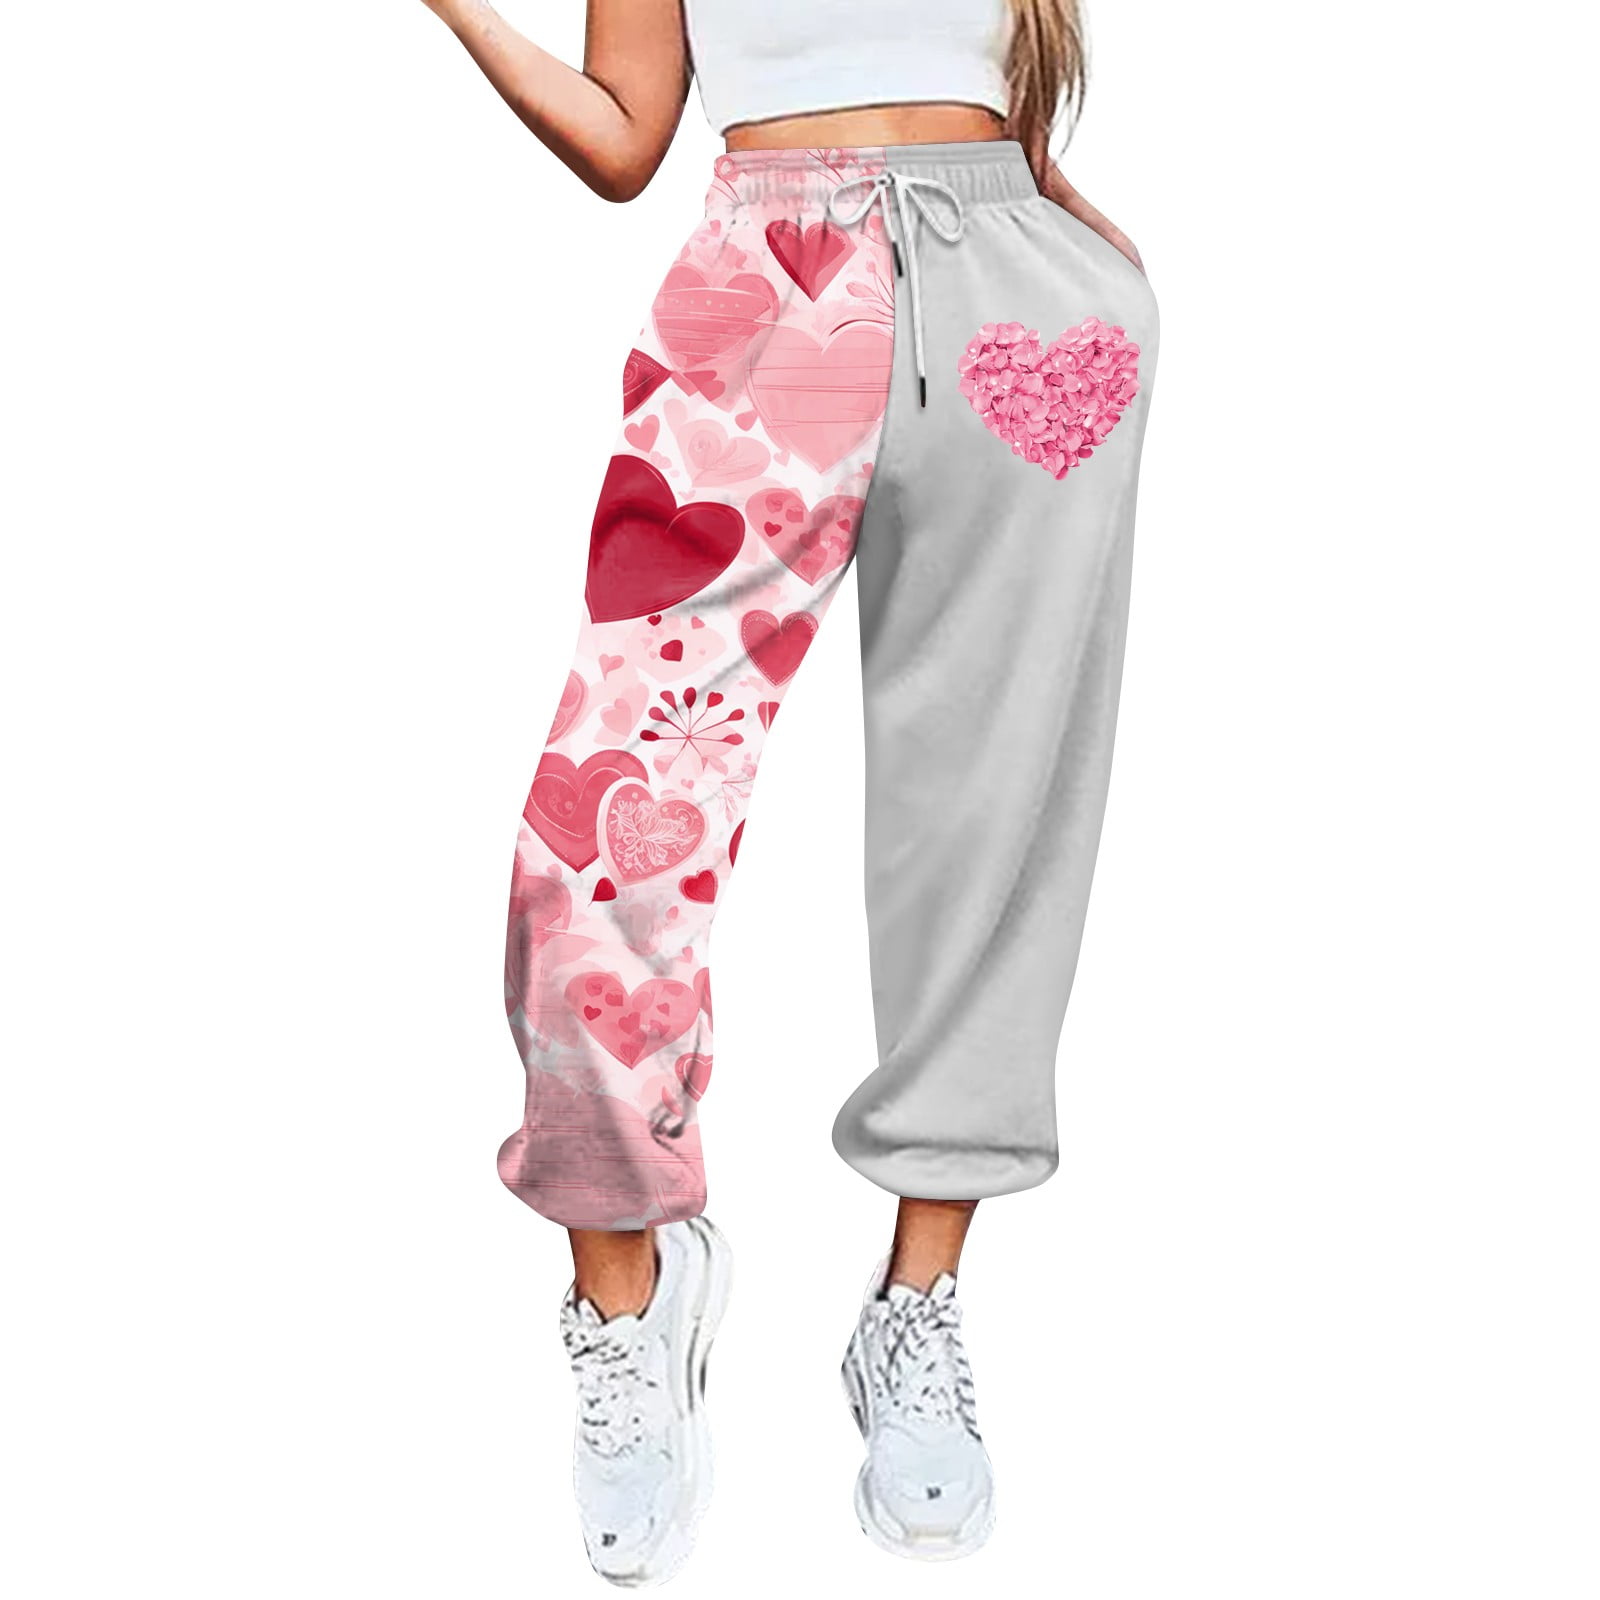 DENGDENG Valentine's Day Plus Size Petite Sweatpants for Women